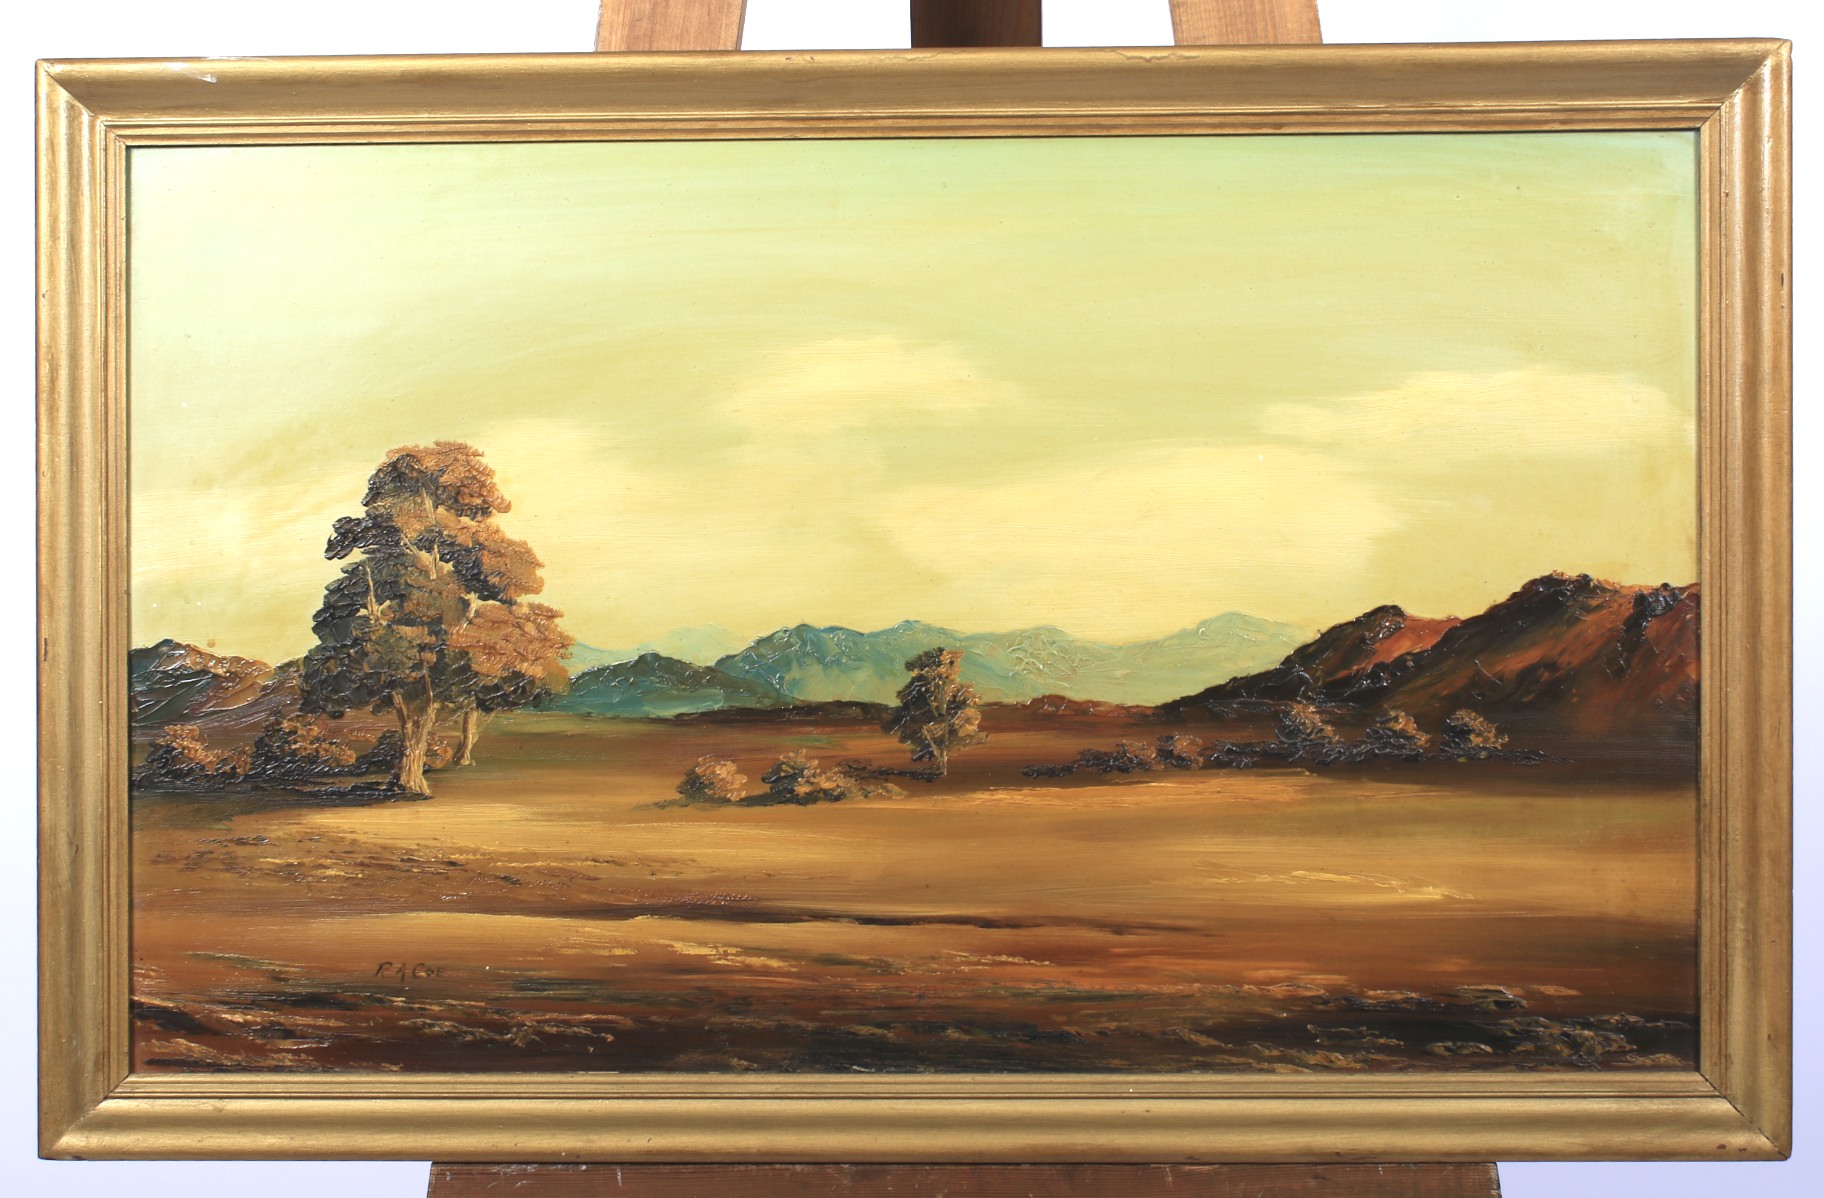 RA Coe (Western Australia, 20th Century), Rocky Tree Strewn Landscape, oil on board.